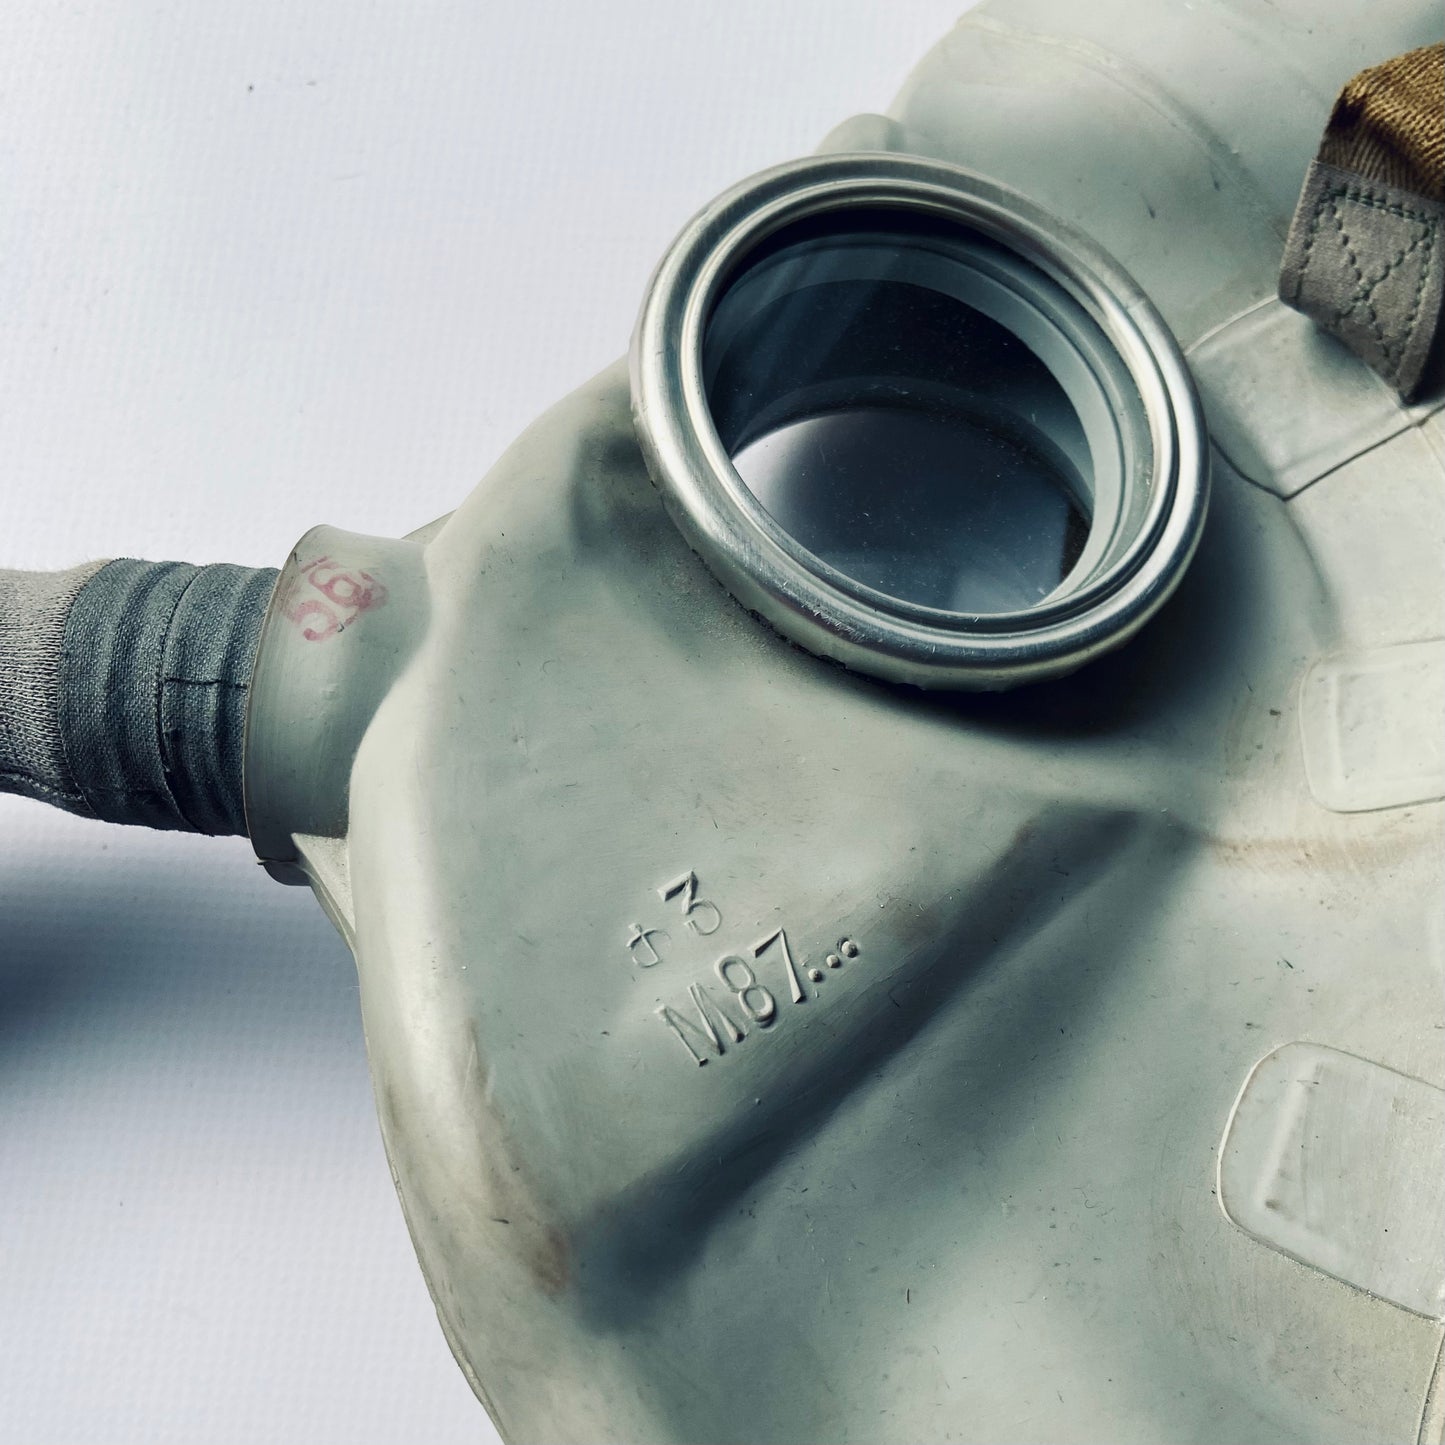 Gas mask (M87), Ukraine, 1980s